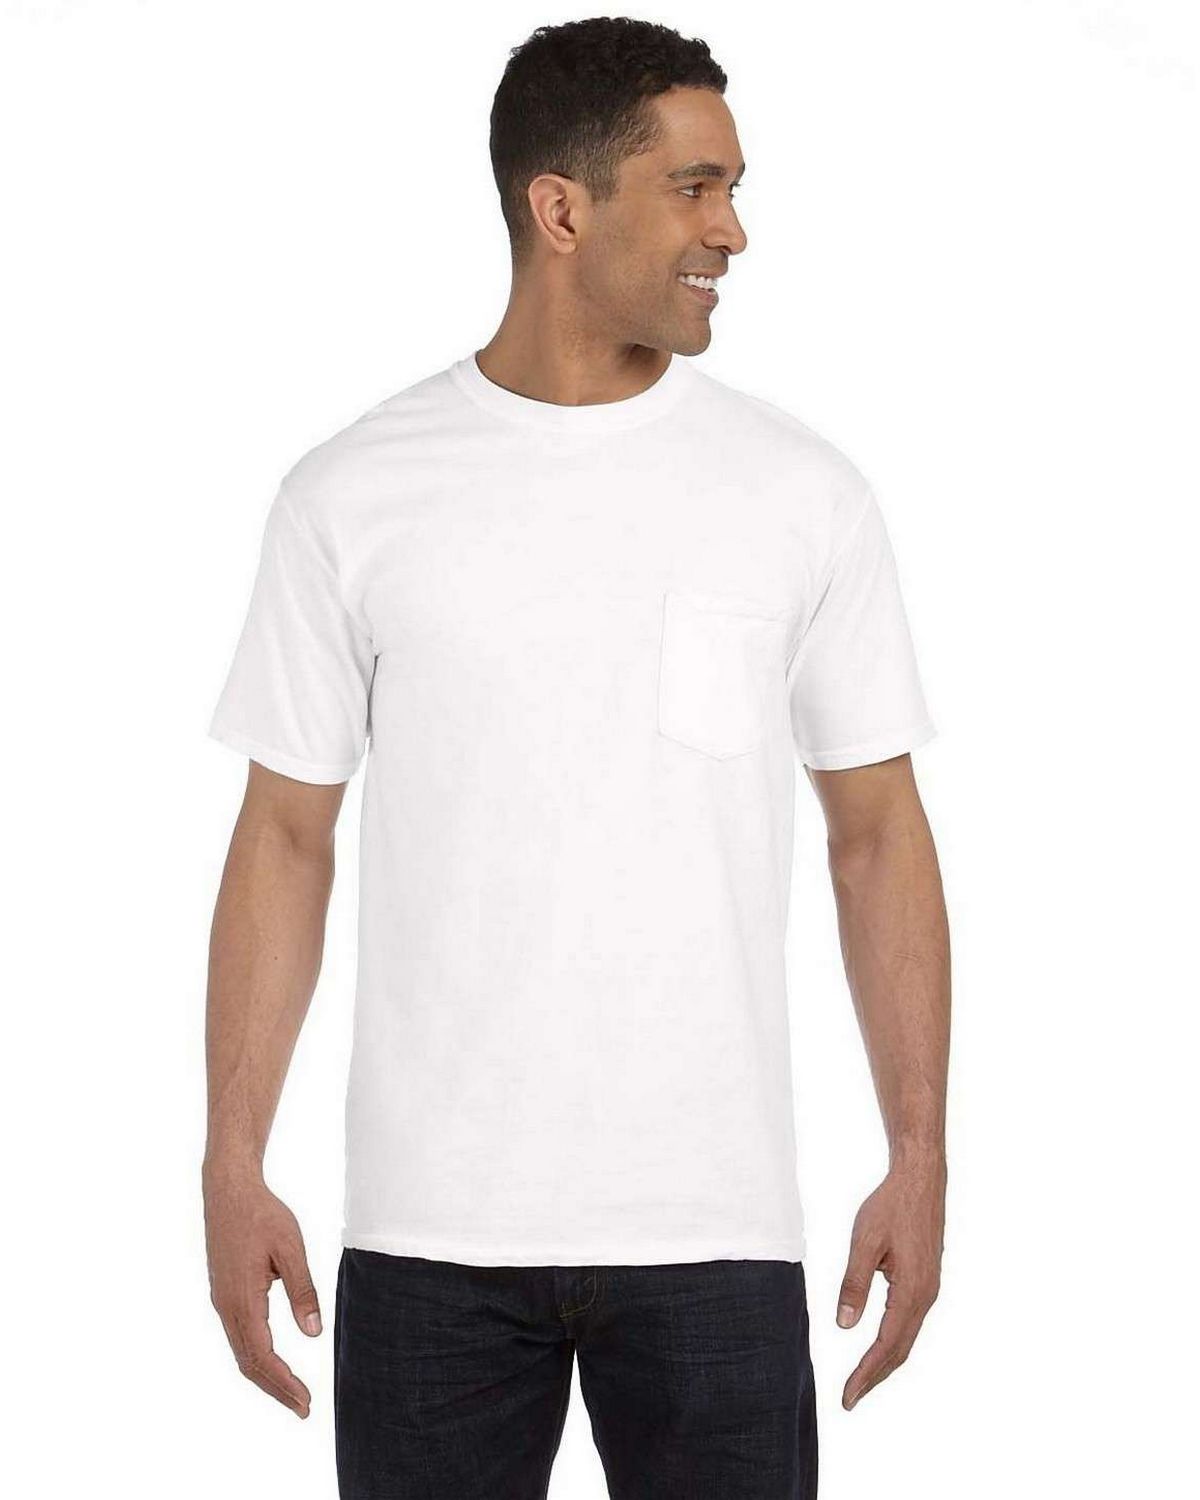 Virginia Cavaliers Navy Baseball Flag Comfort Colors T-Shirt